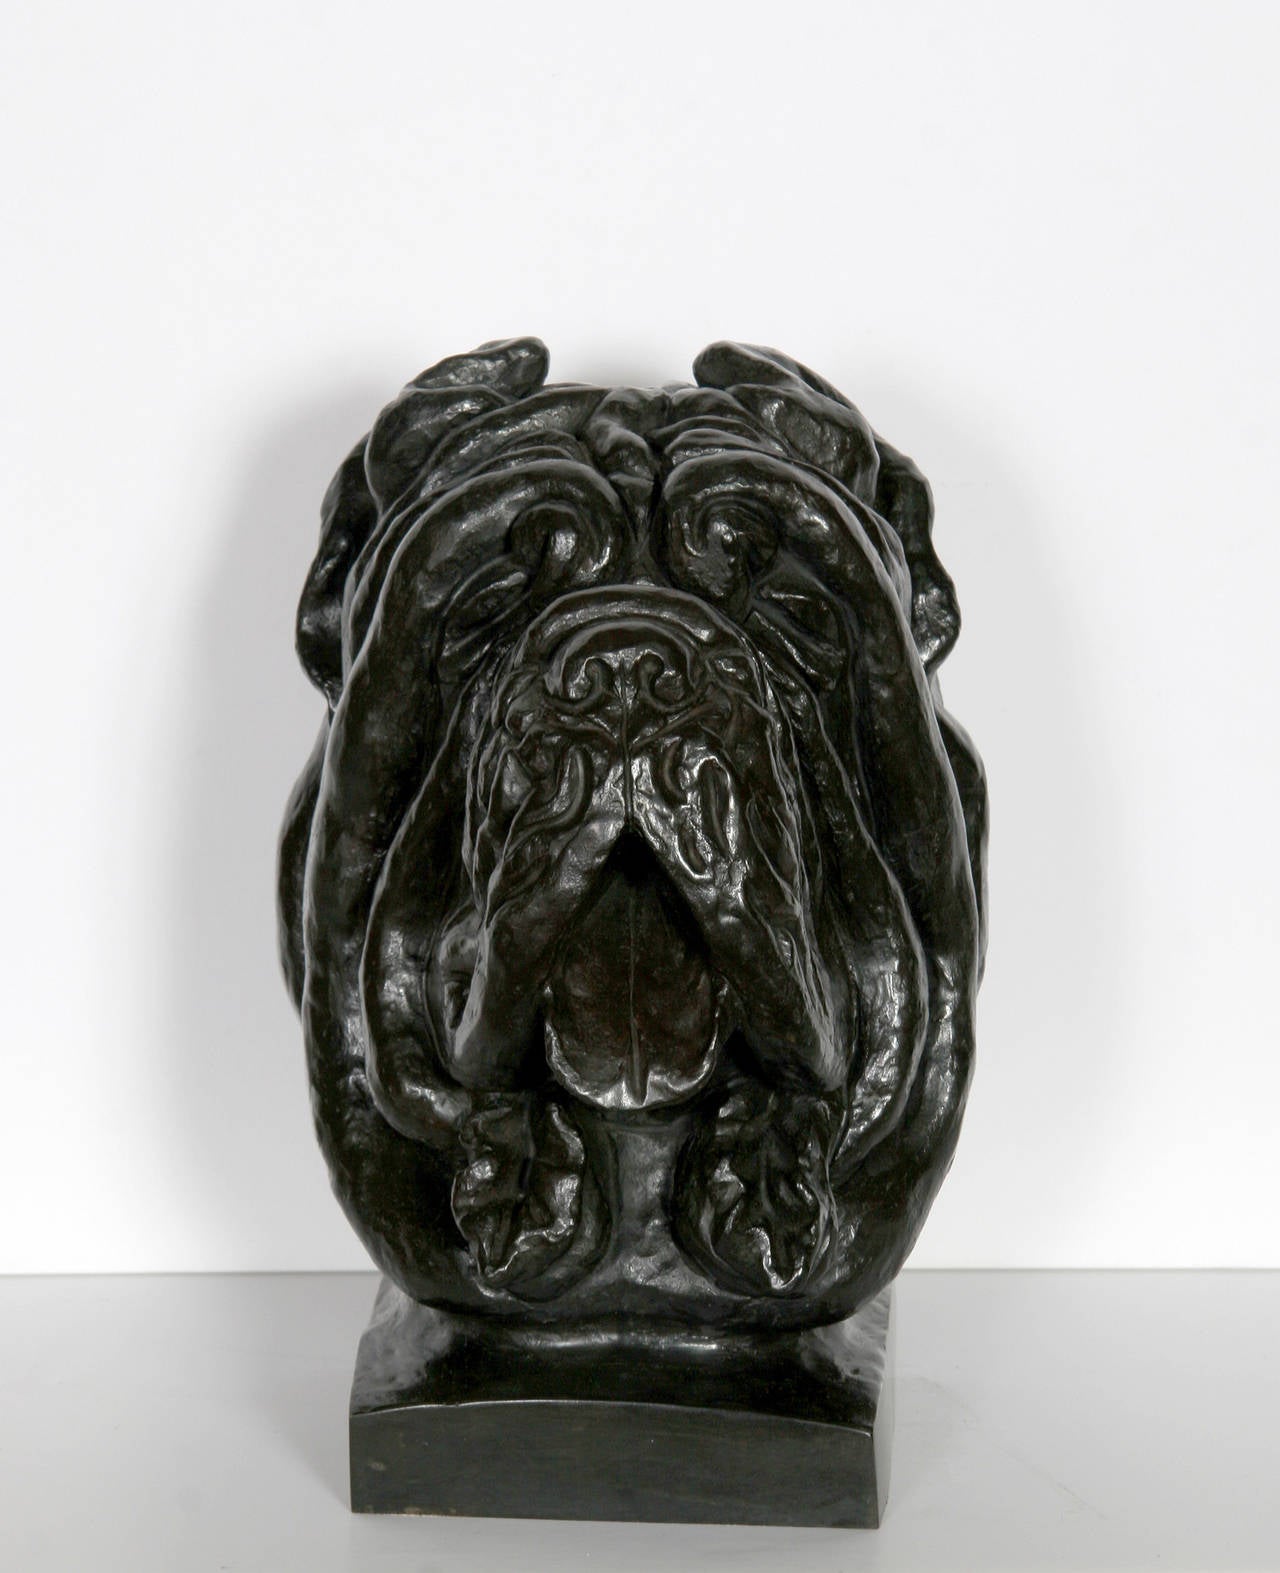 Unknown Still-Life Sculpture - Cane Corso Dog Bust, Patinated Bronze Sculpture